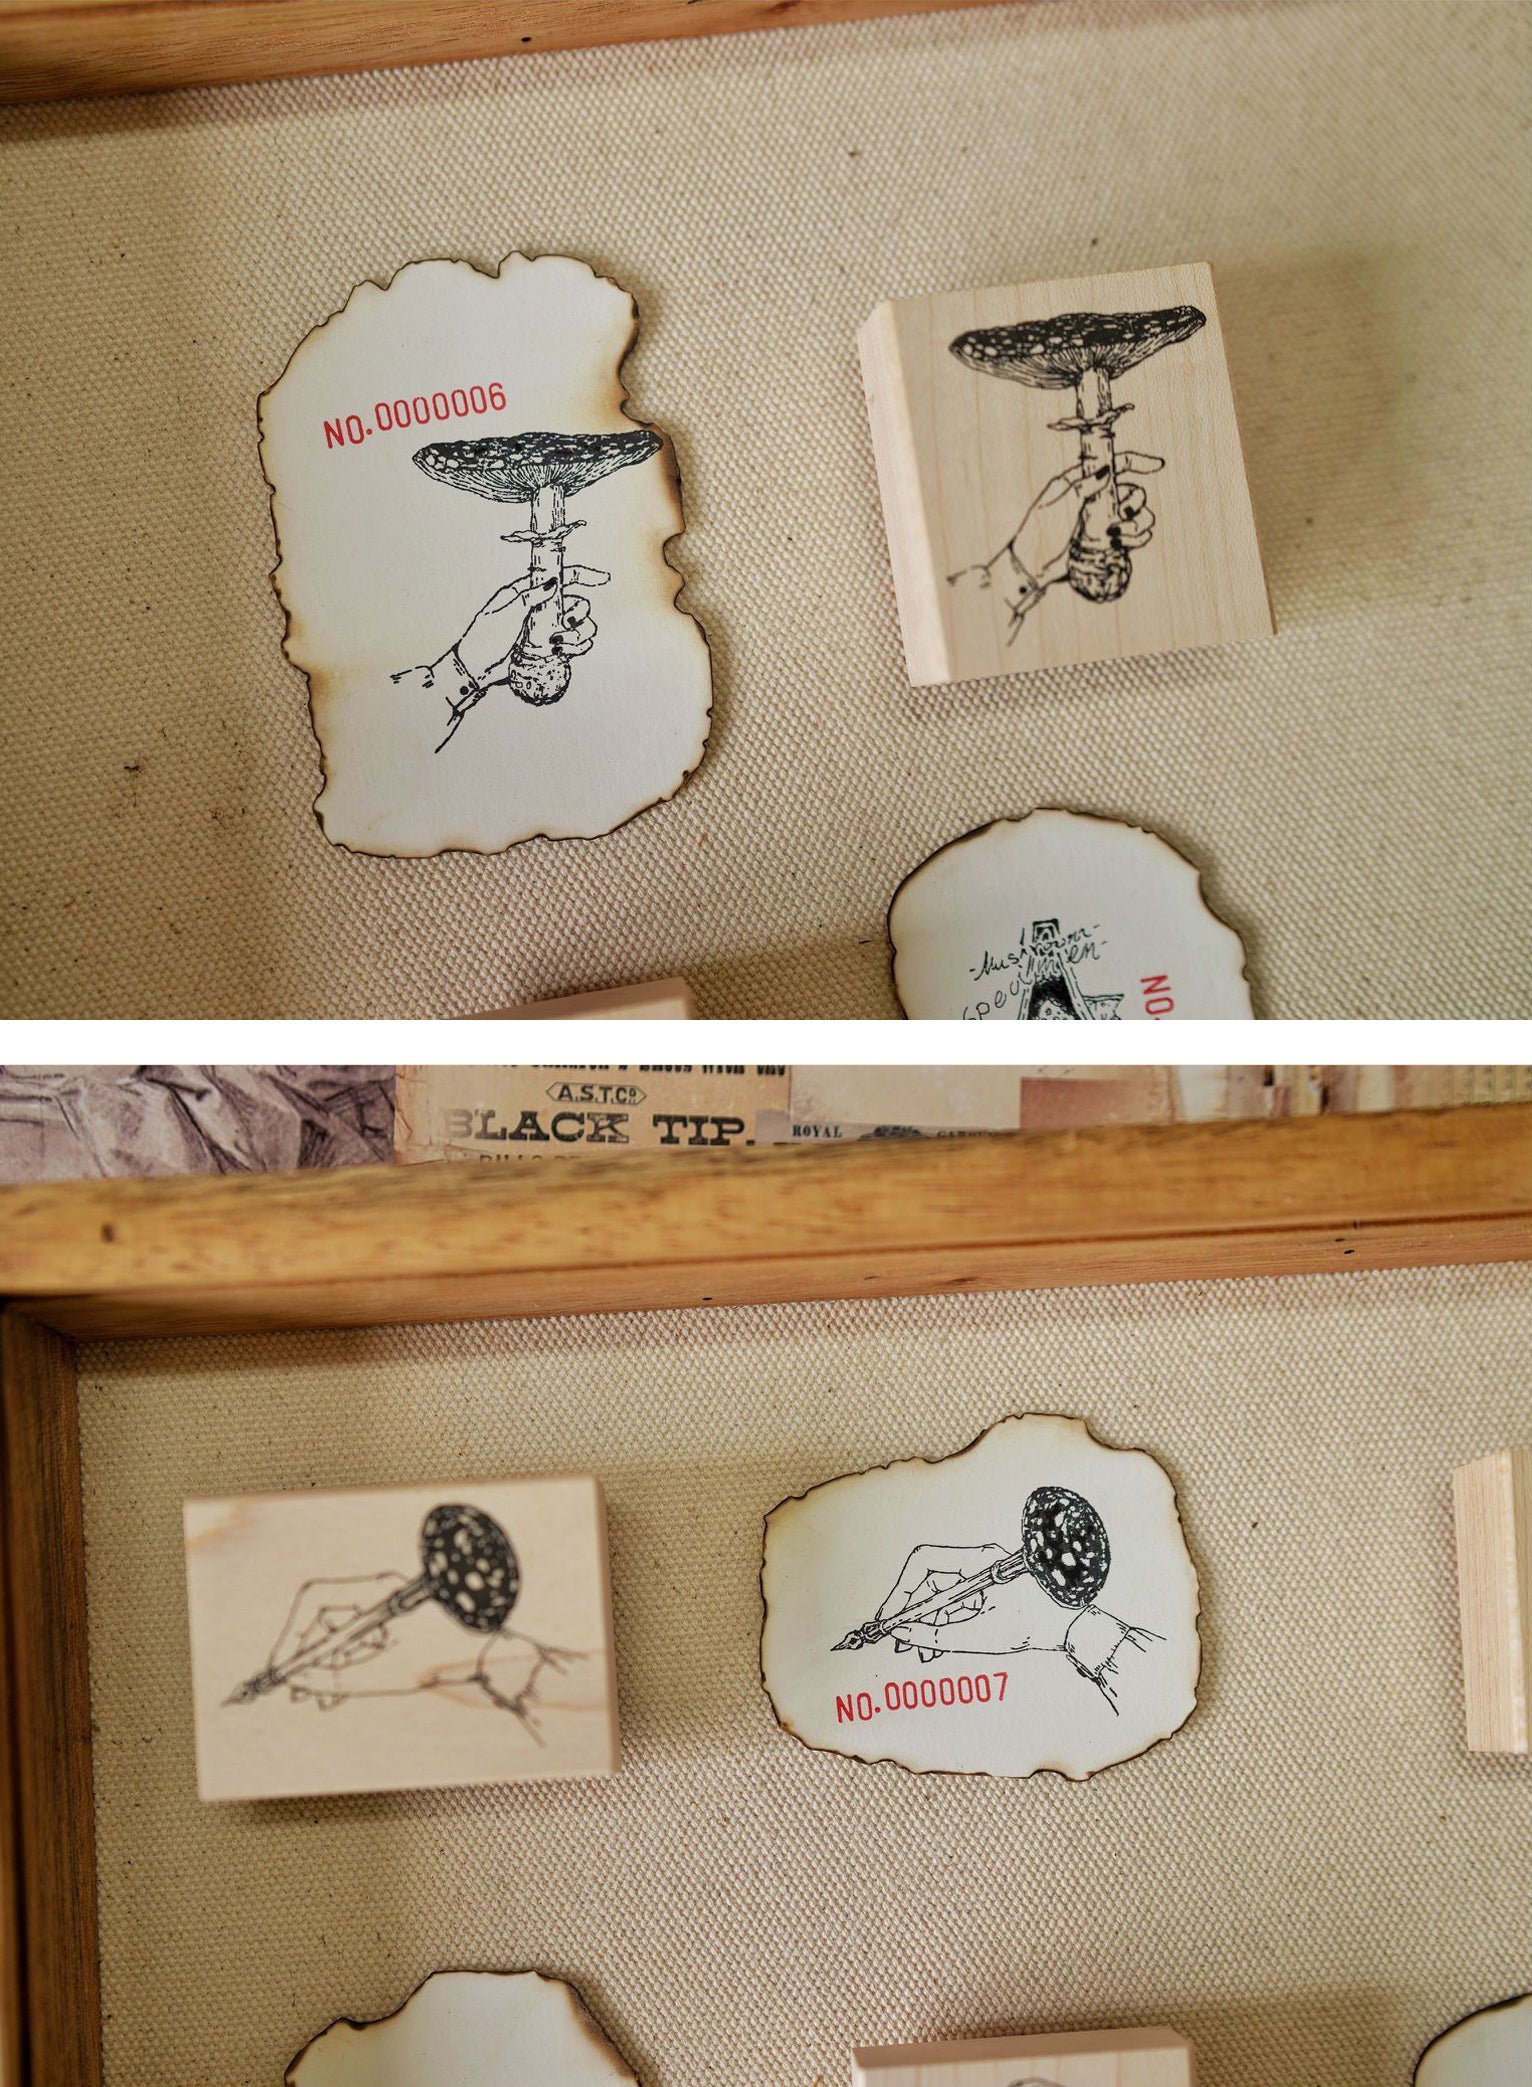 Benchu Studio: Mushroom Collector Stamps (Set B)